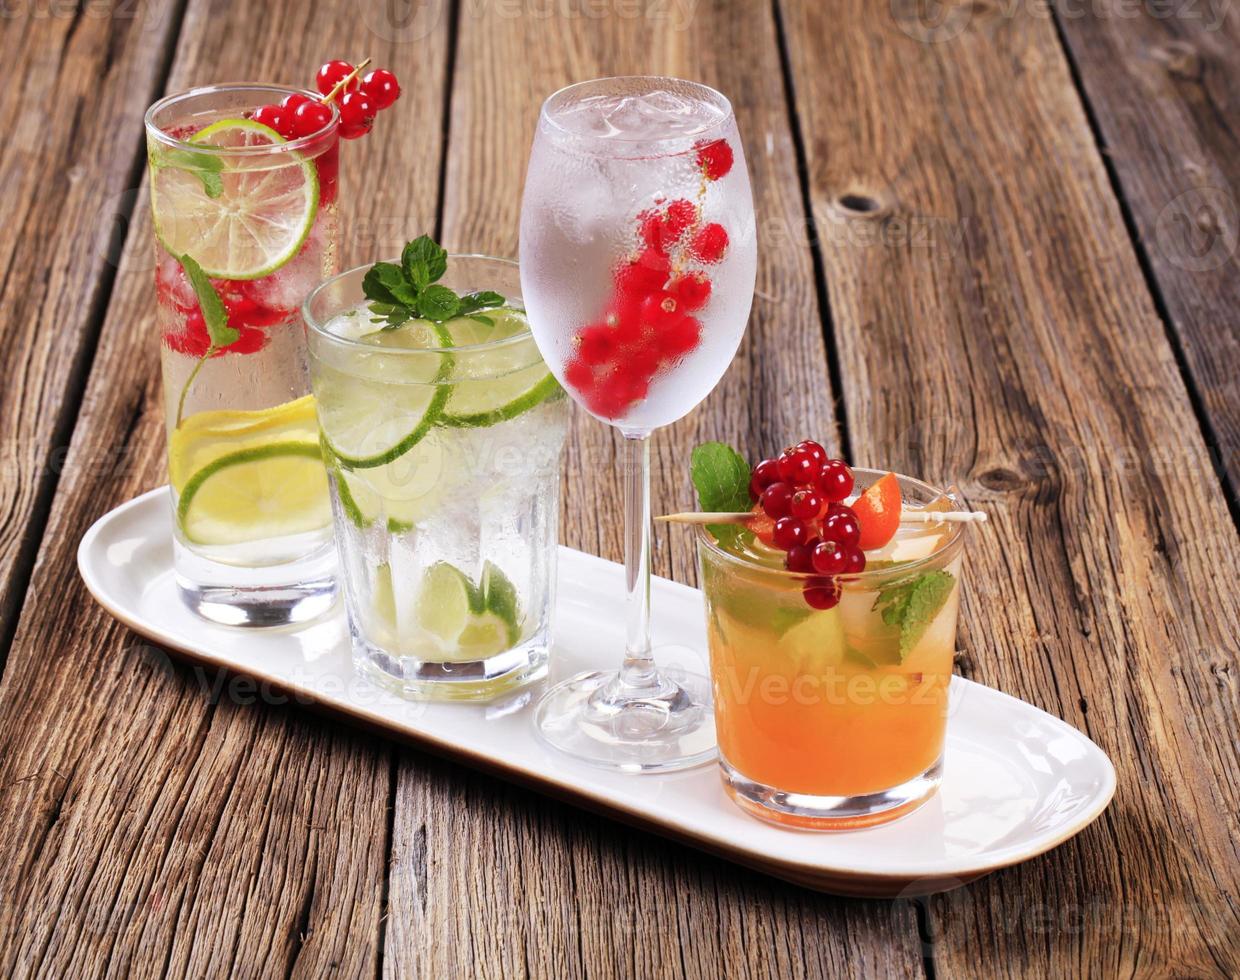 bicchieri di bibite ghiacciate guarnite con frutta fresca foto